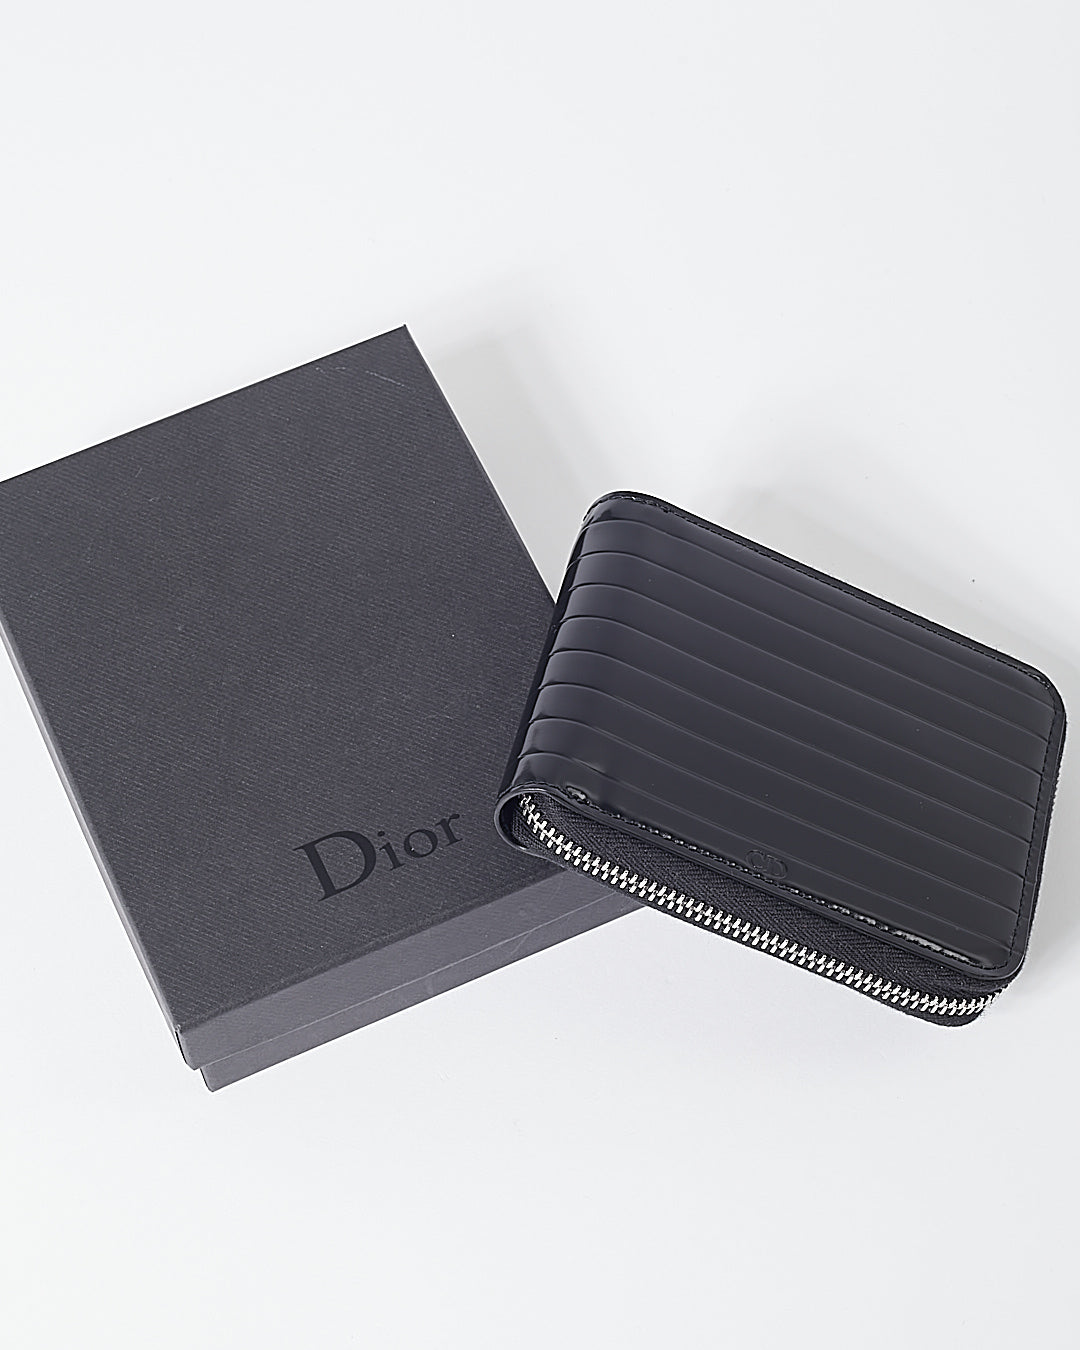 Dior Homme Black Patent Zippy Wallet